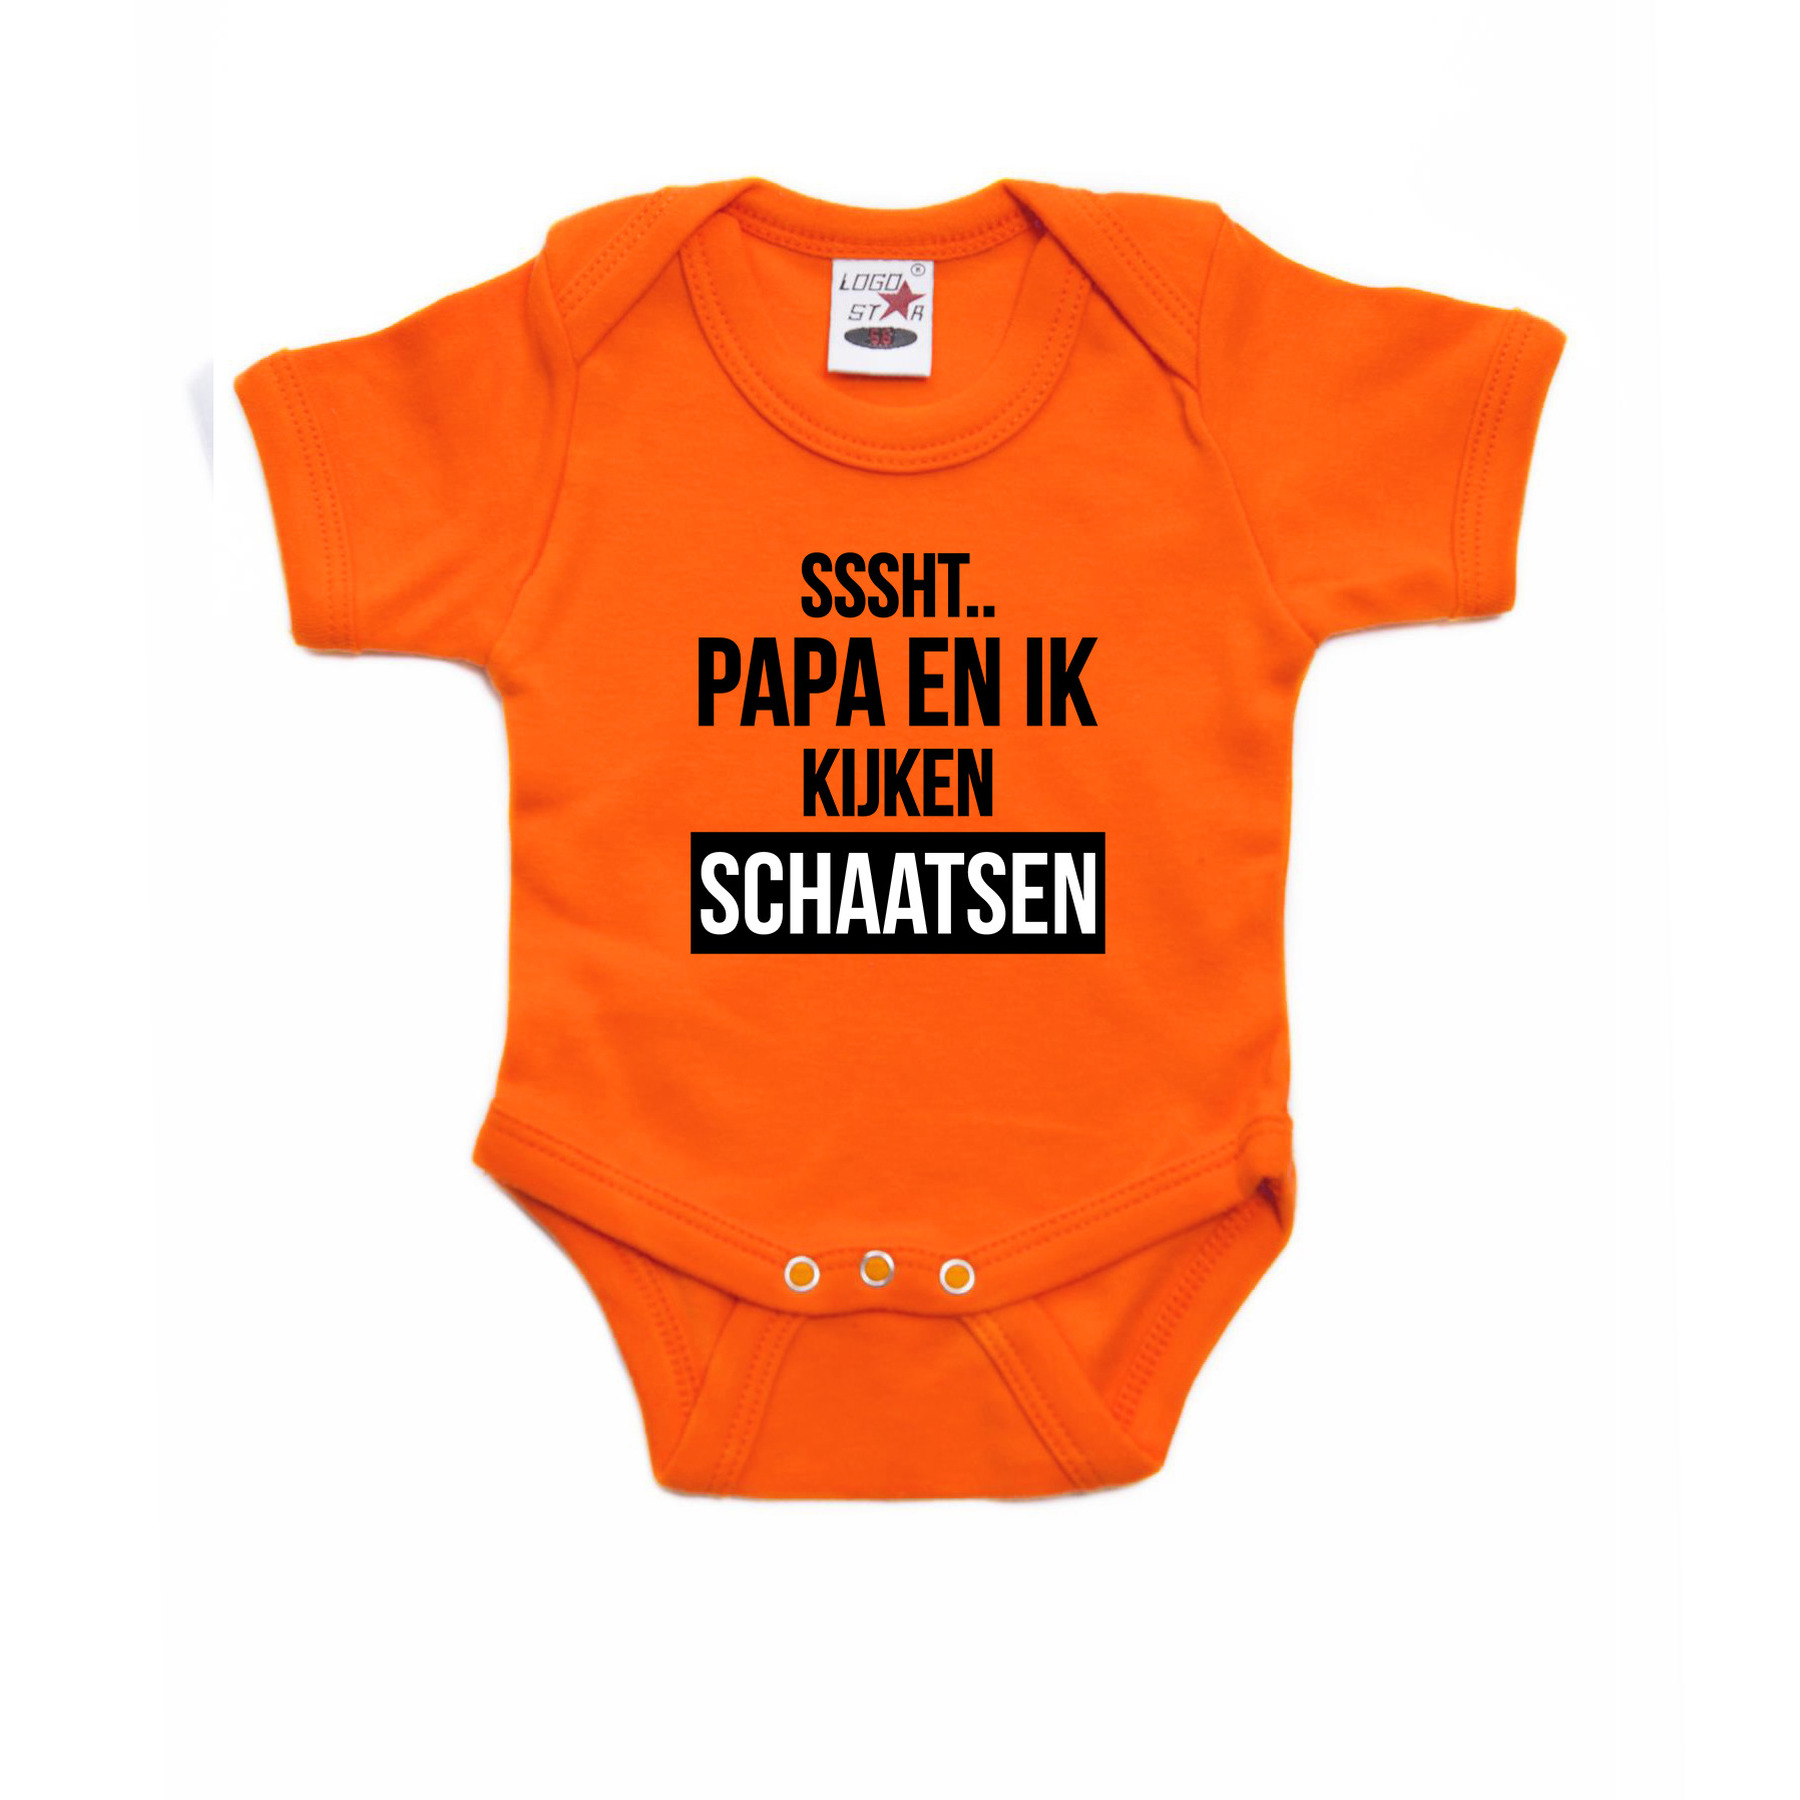 Sssht kijken schaatsen baby rompertje oranje Holland-Nederland-EK-WK supporter